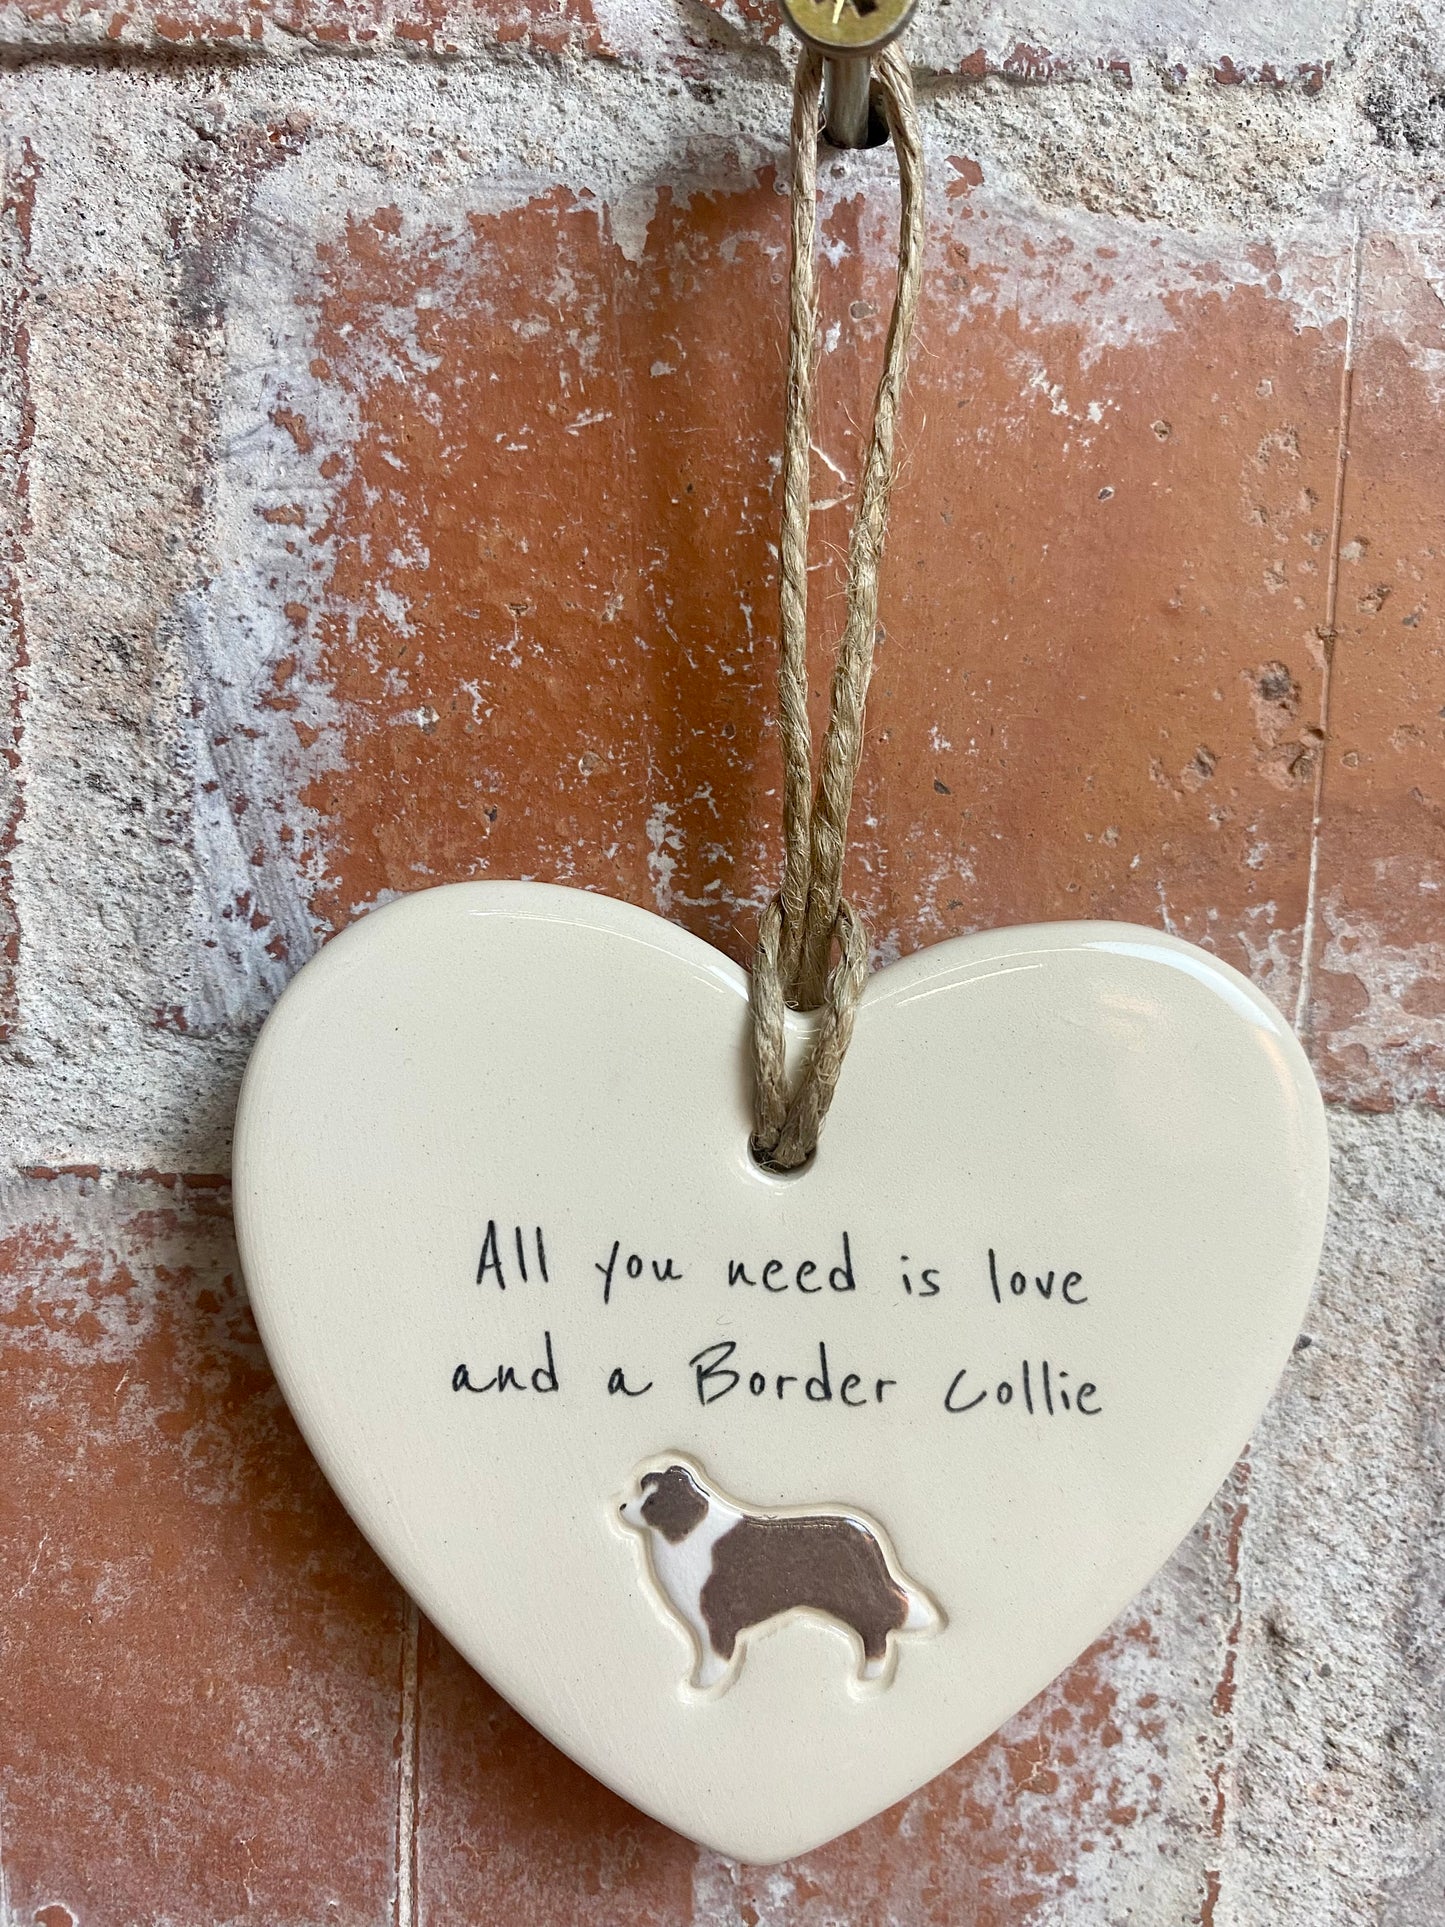 Border Collie ceramic heart